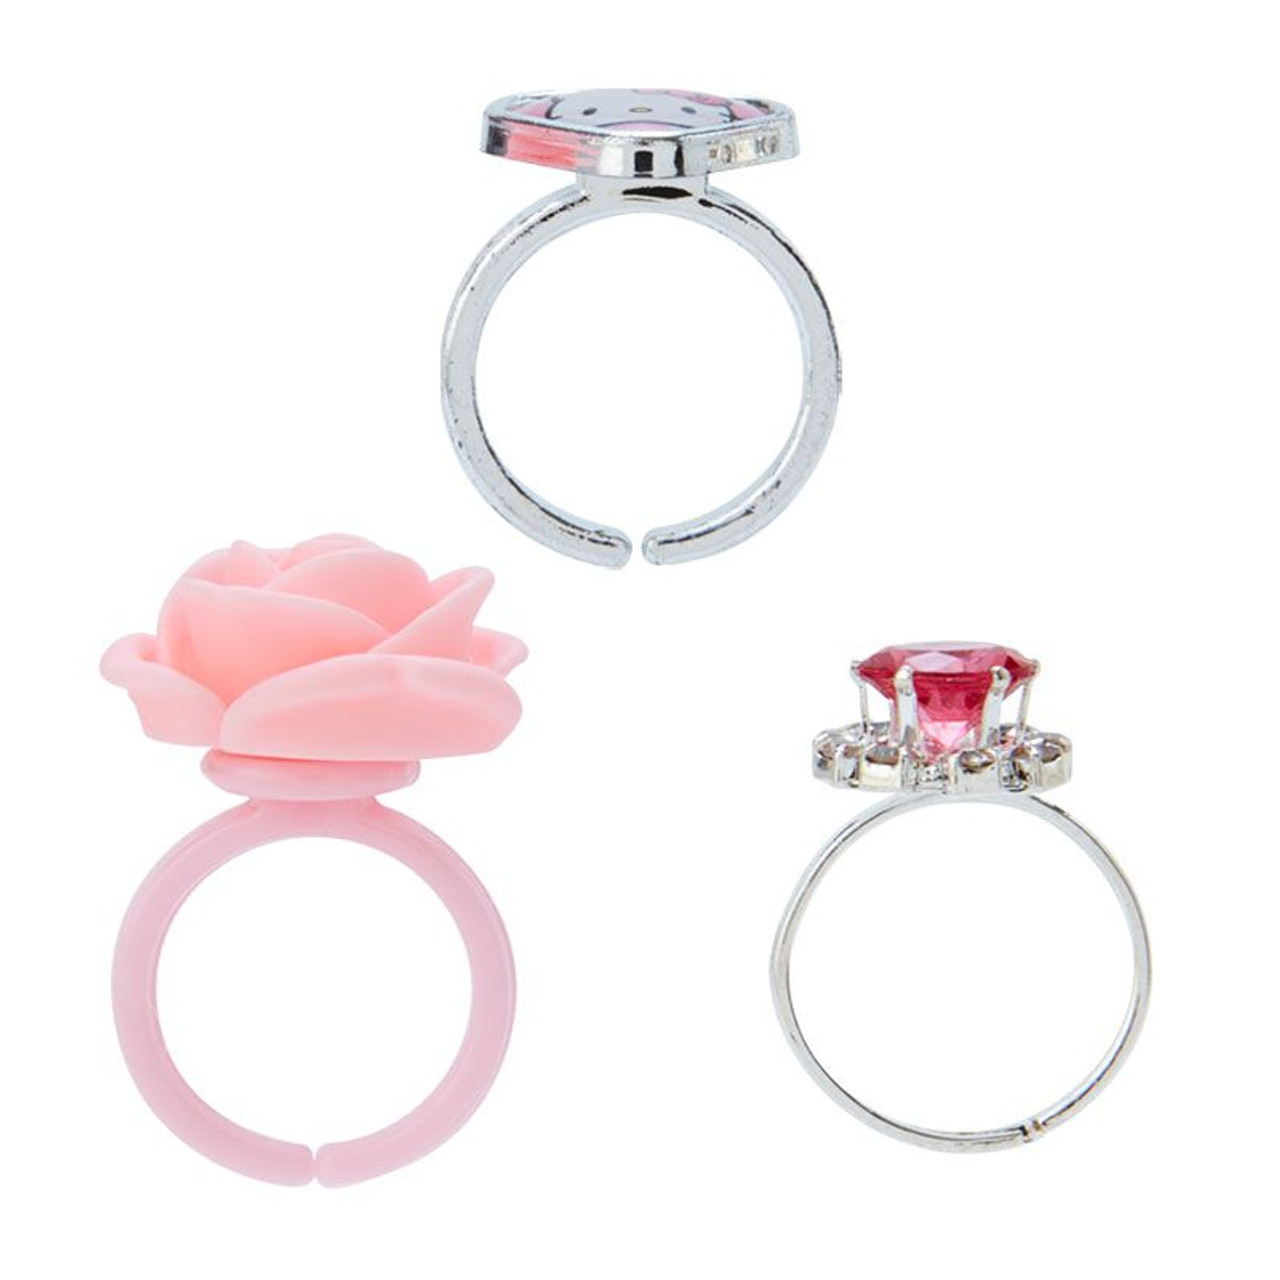 Sanrio Characters Jewelry Engagement Proposals Wedding Ring Box |  Cinnamoroll | eBay